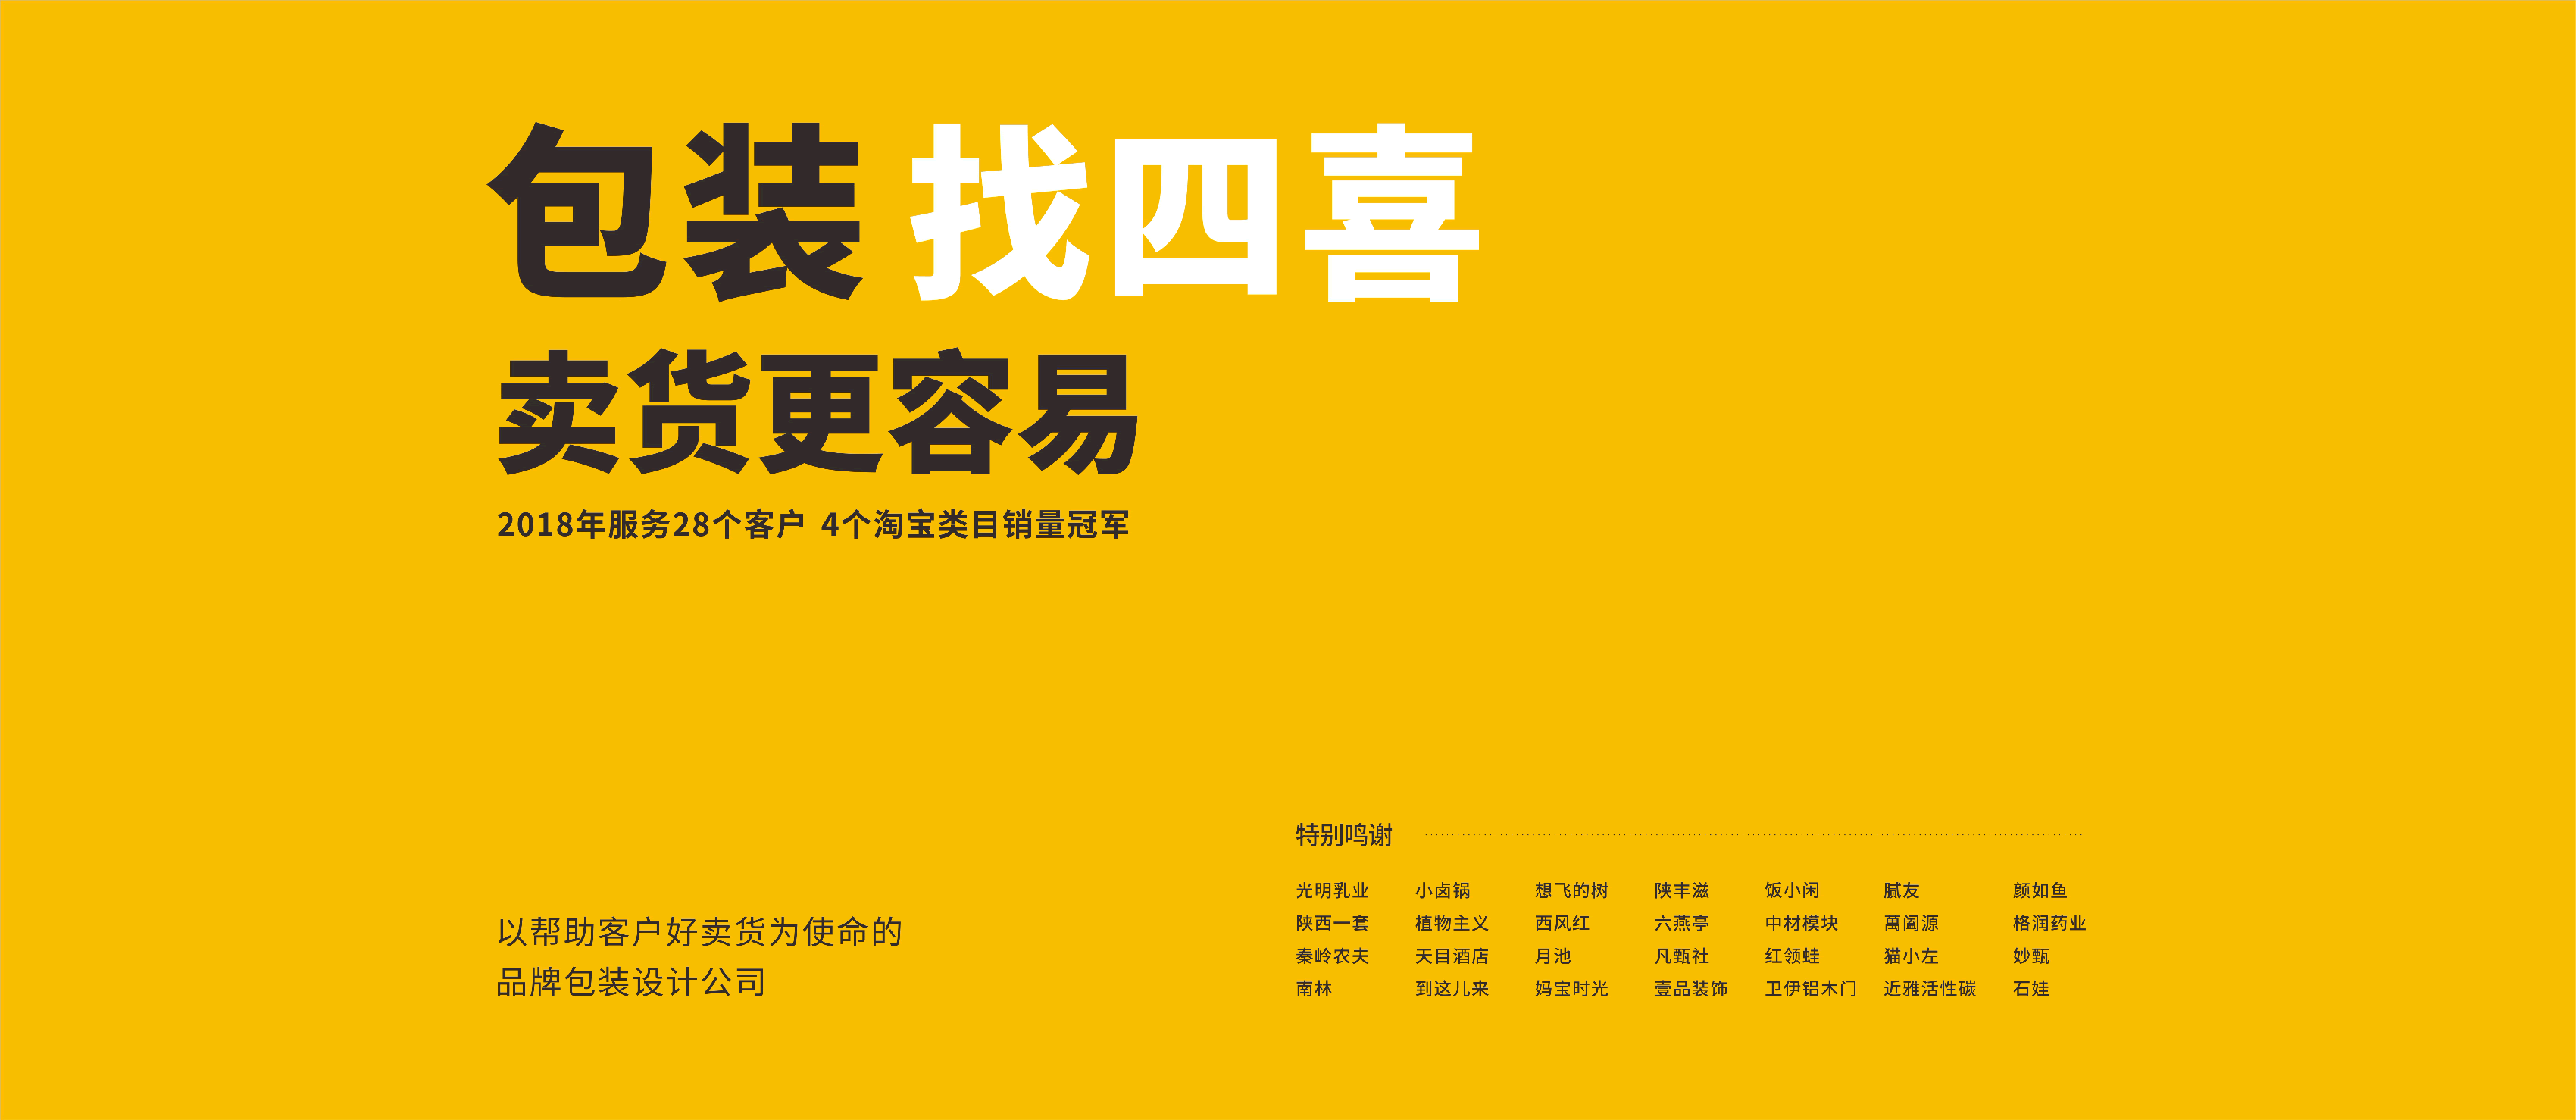 leyu-乐鱼全站app下载(中国)app store
案例-壹品装饰 | 大企业品牌形象升级的“破(图18)